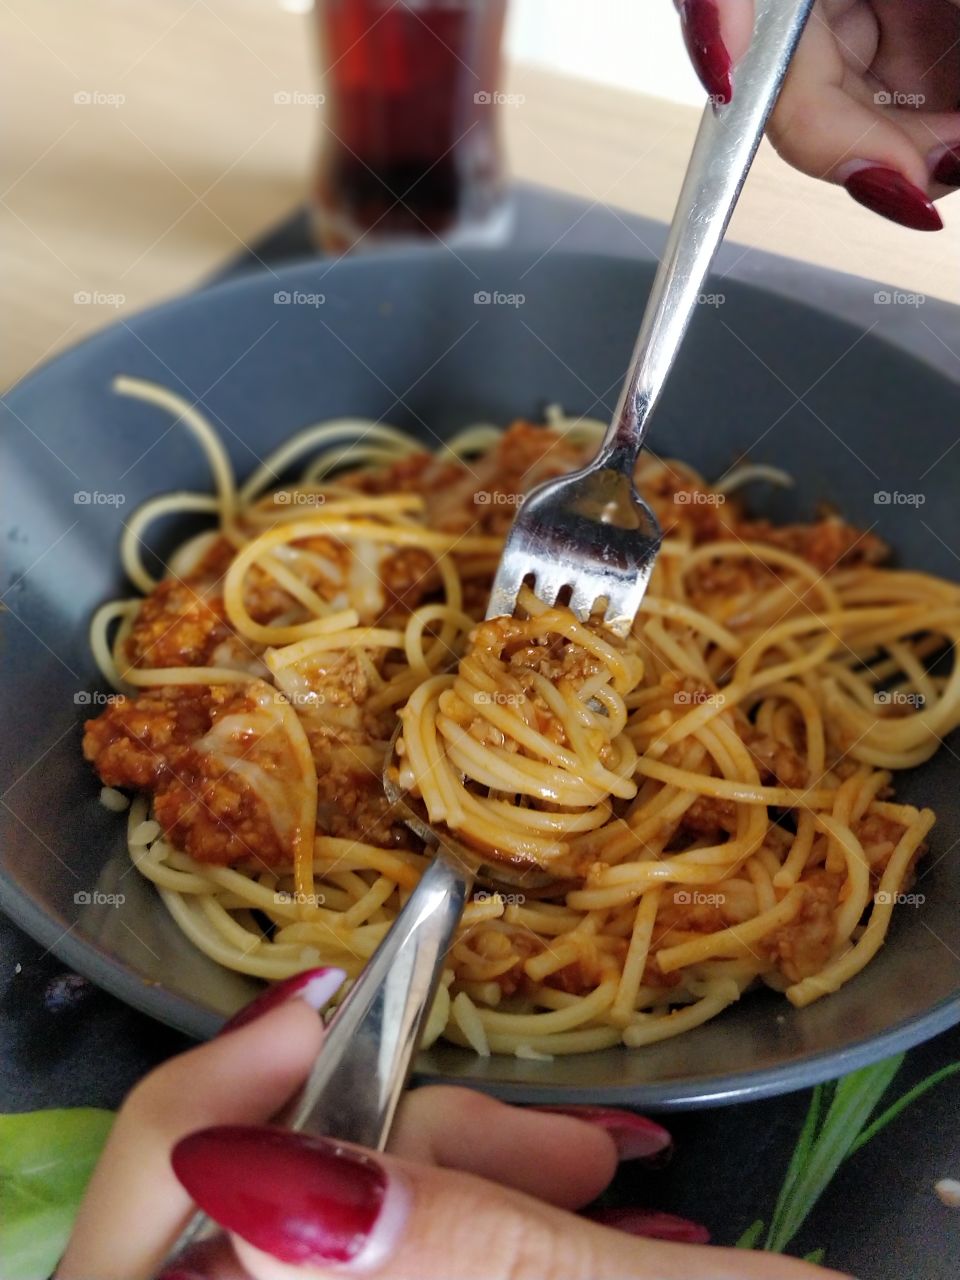 eating spaghetti